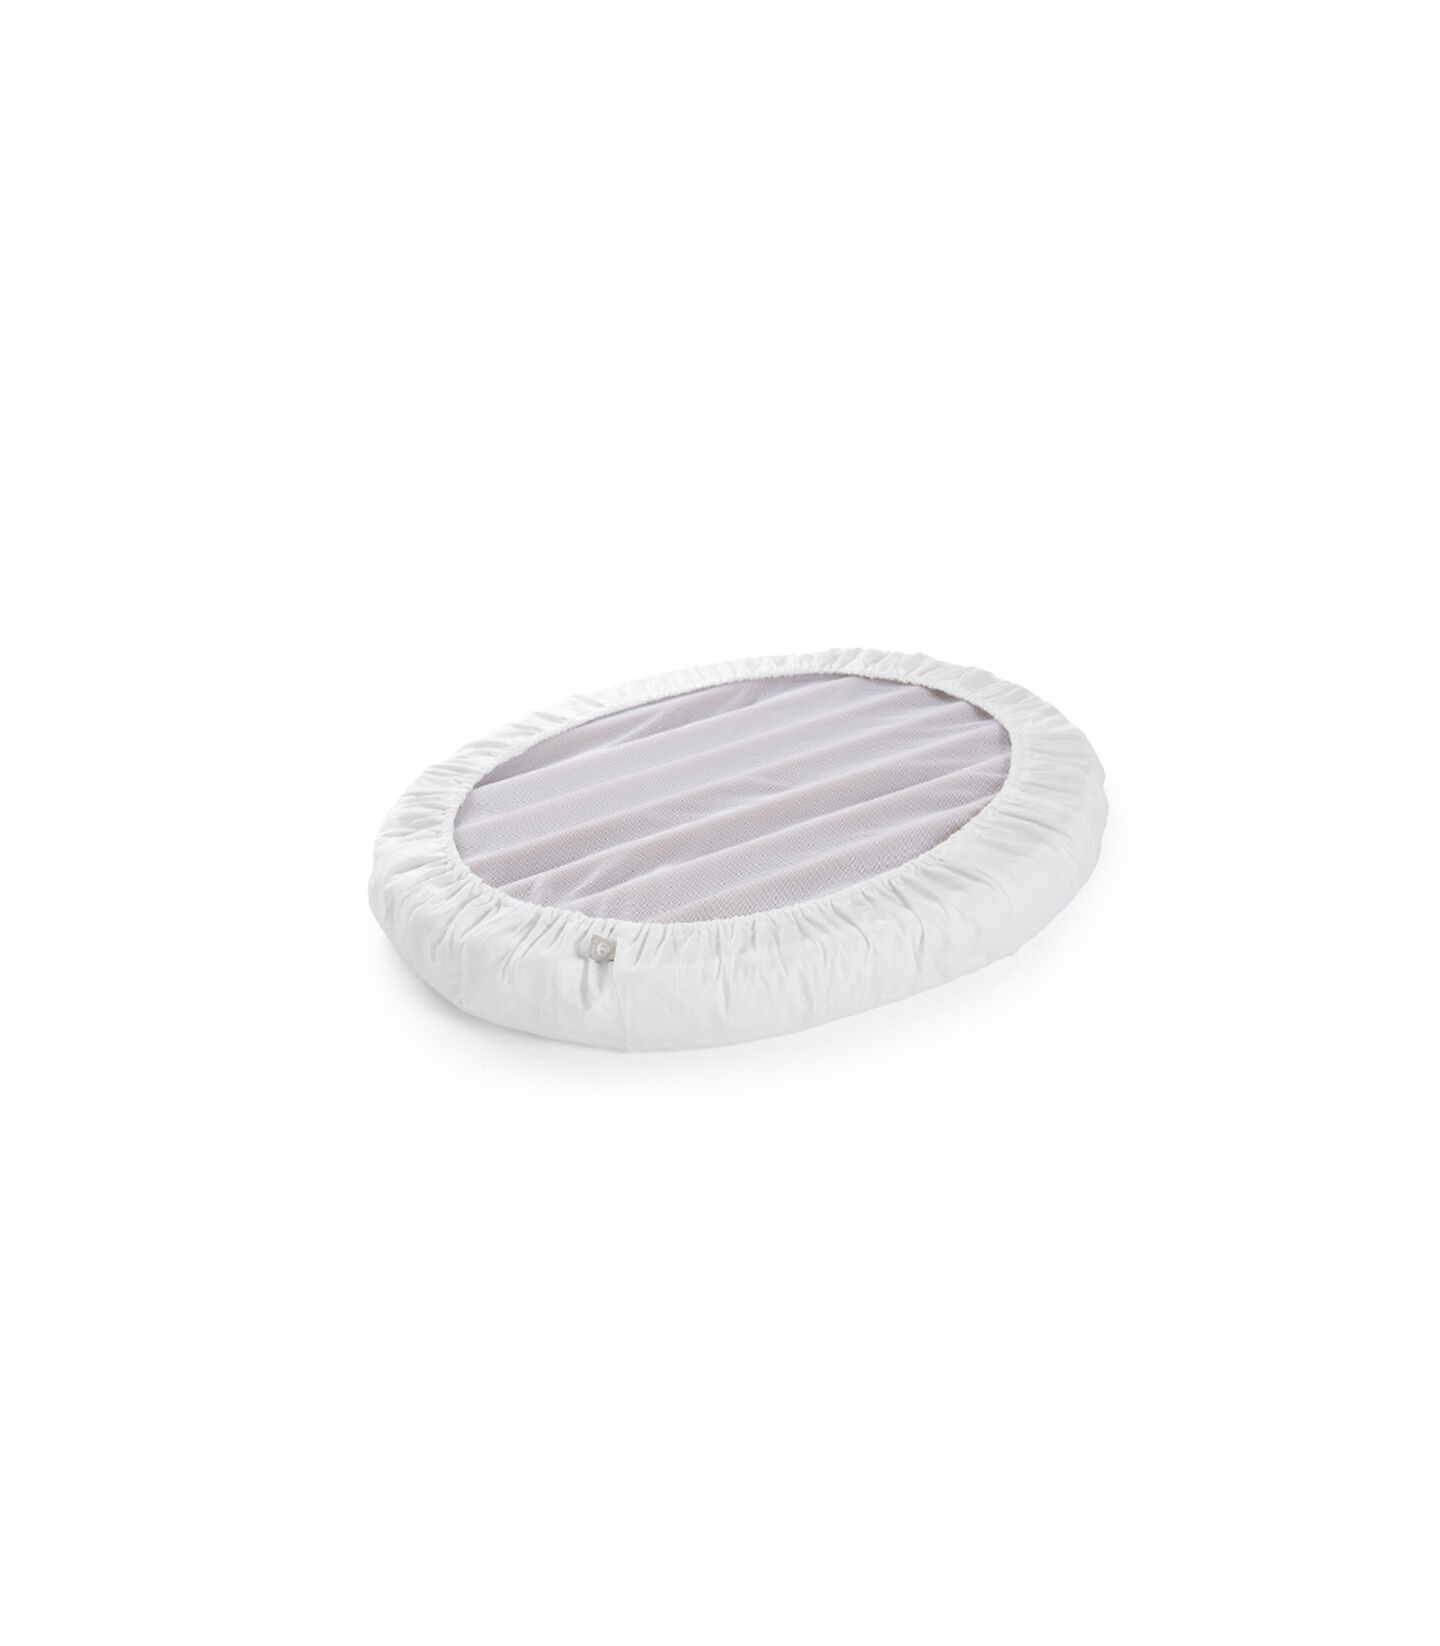 Stokke® Sleepi™ Mini hoeslaken White, Wit, mainview view 2